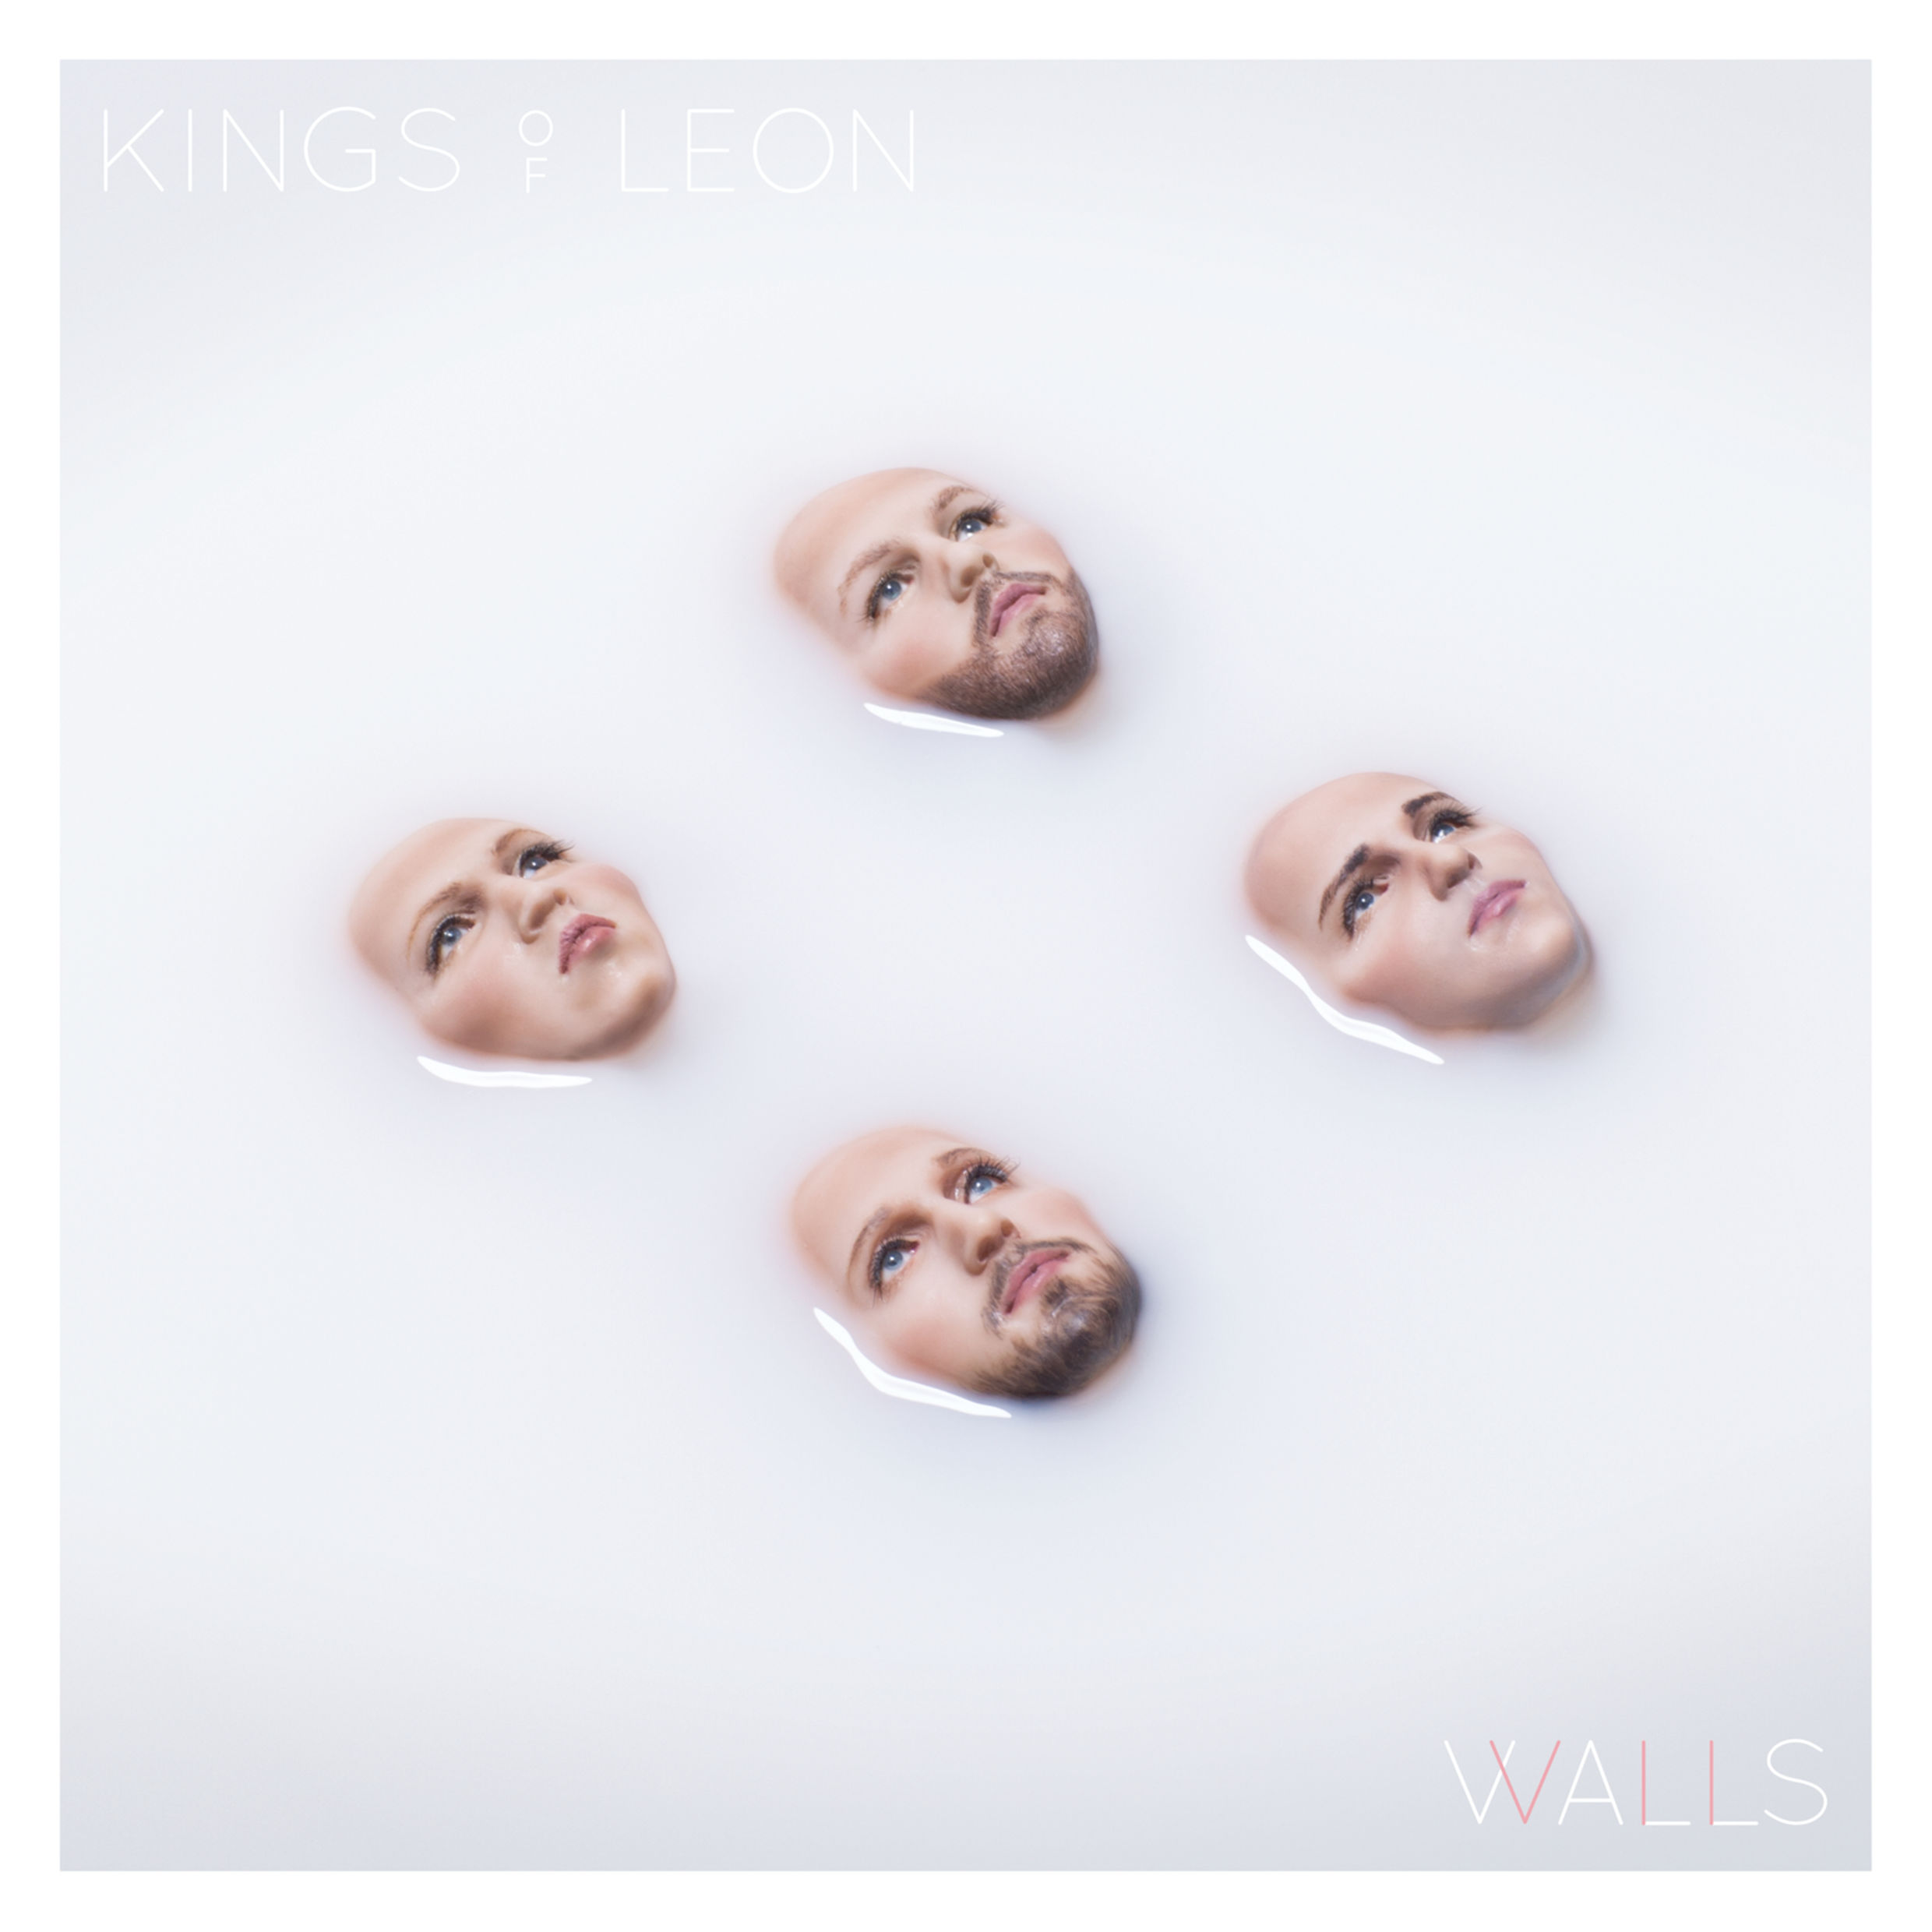 kings-of-leon-walls-2016-2480x2480.jpg